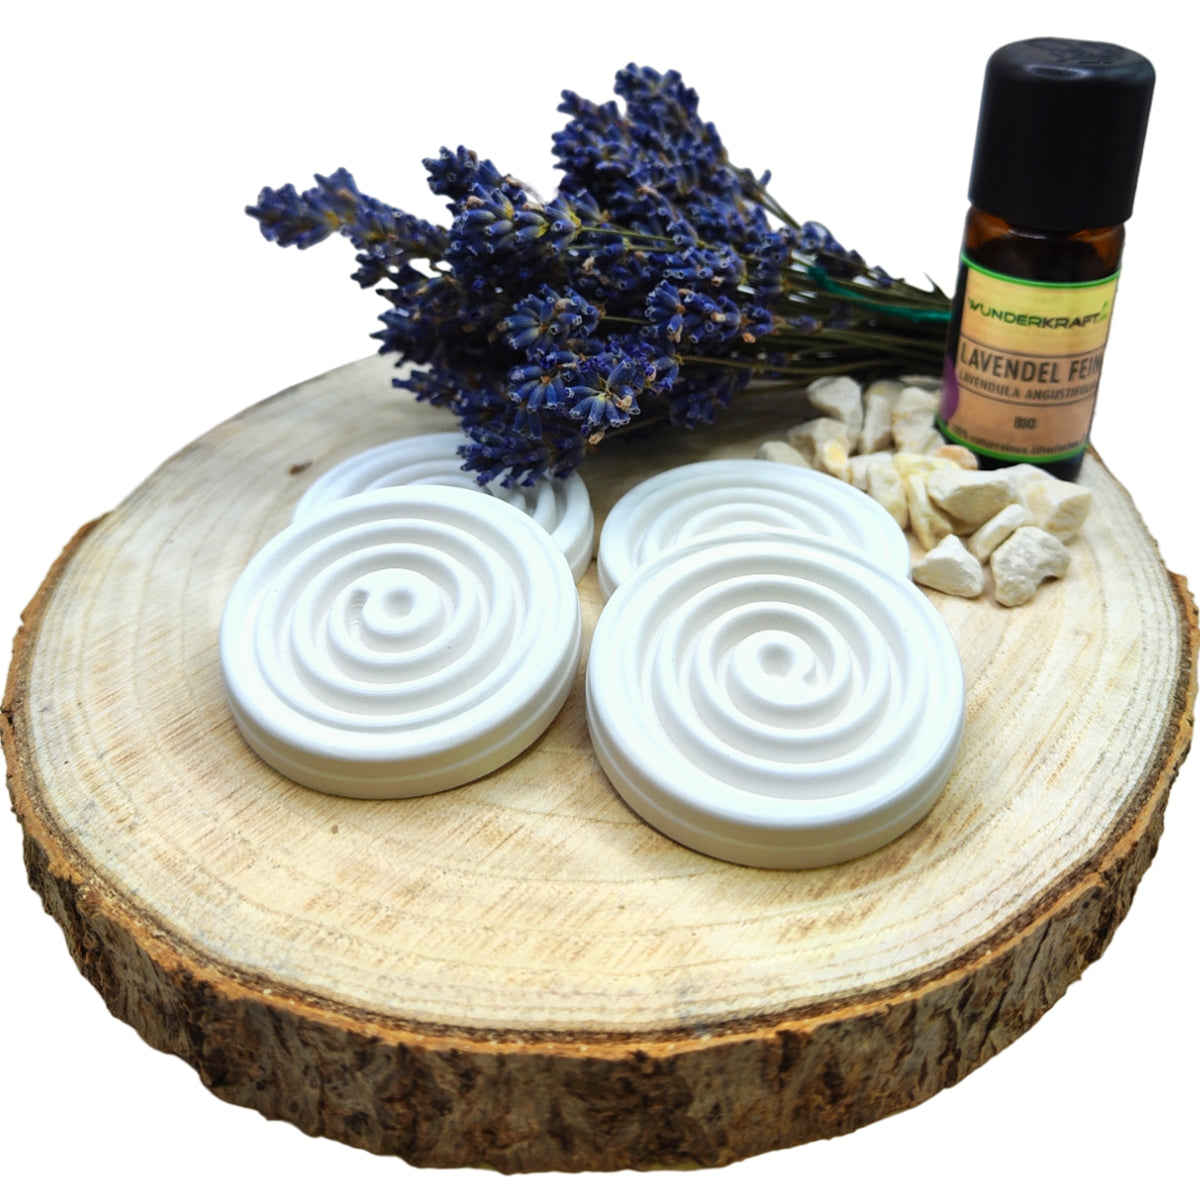 Aromatherapie mit Duftölen